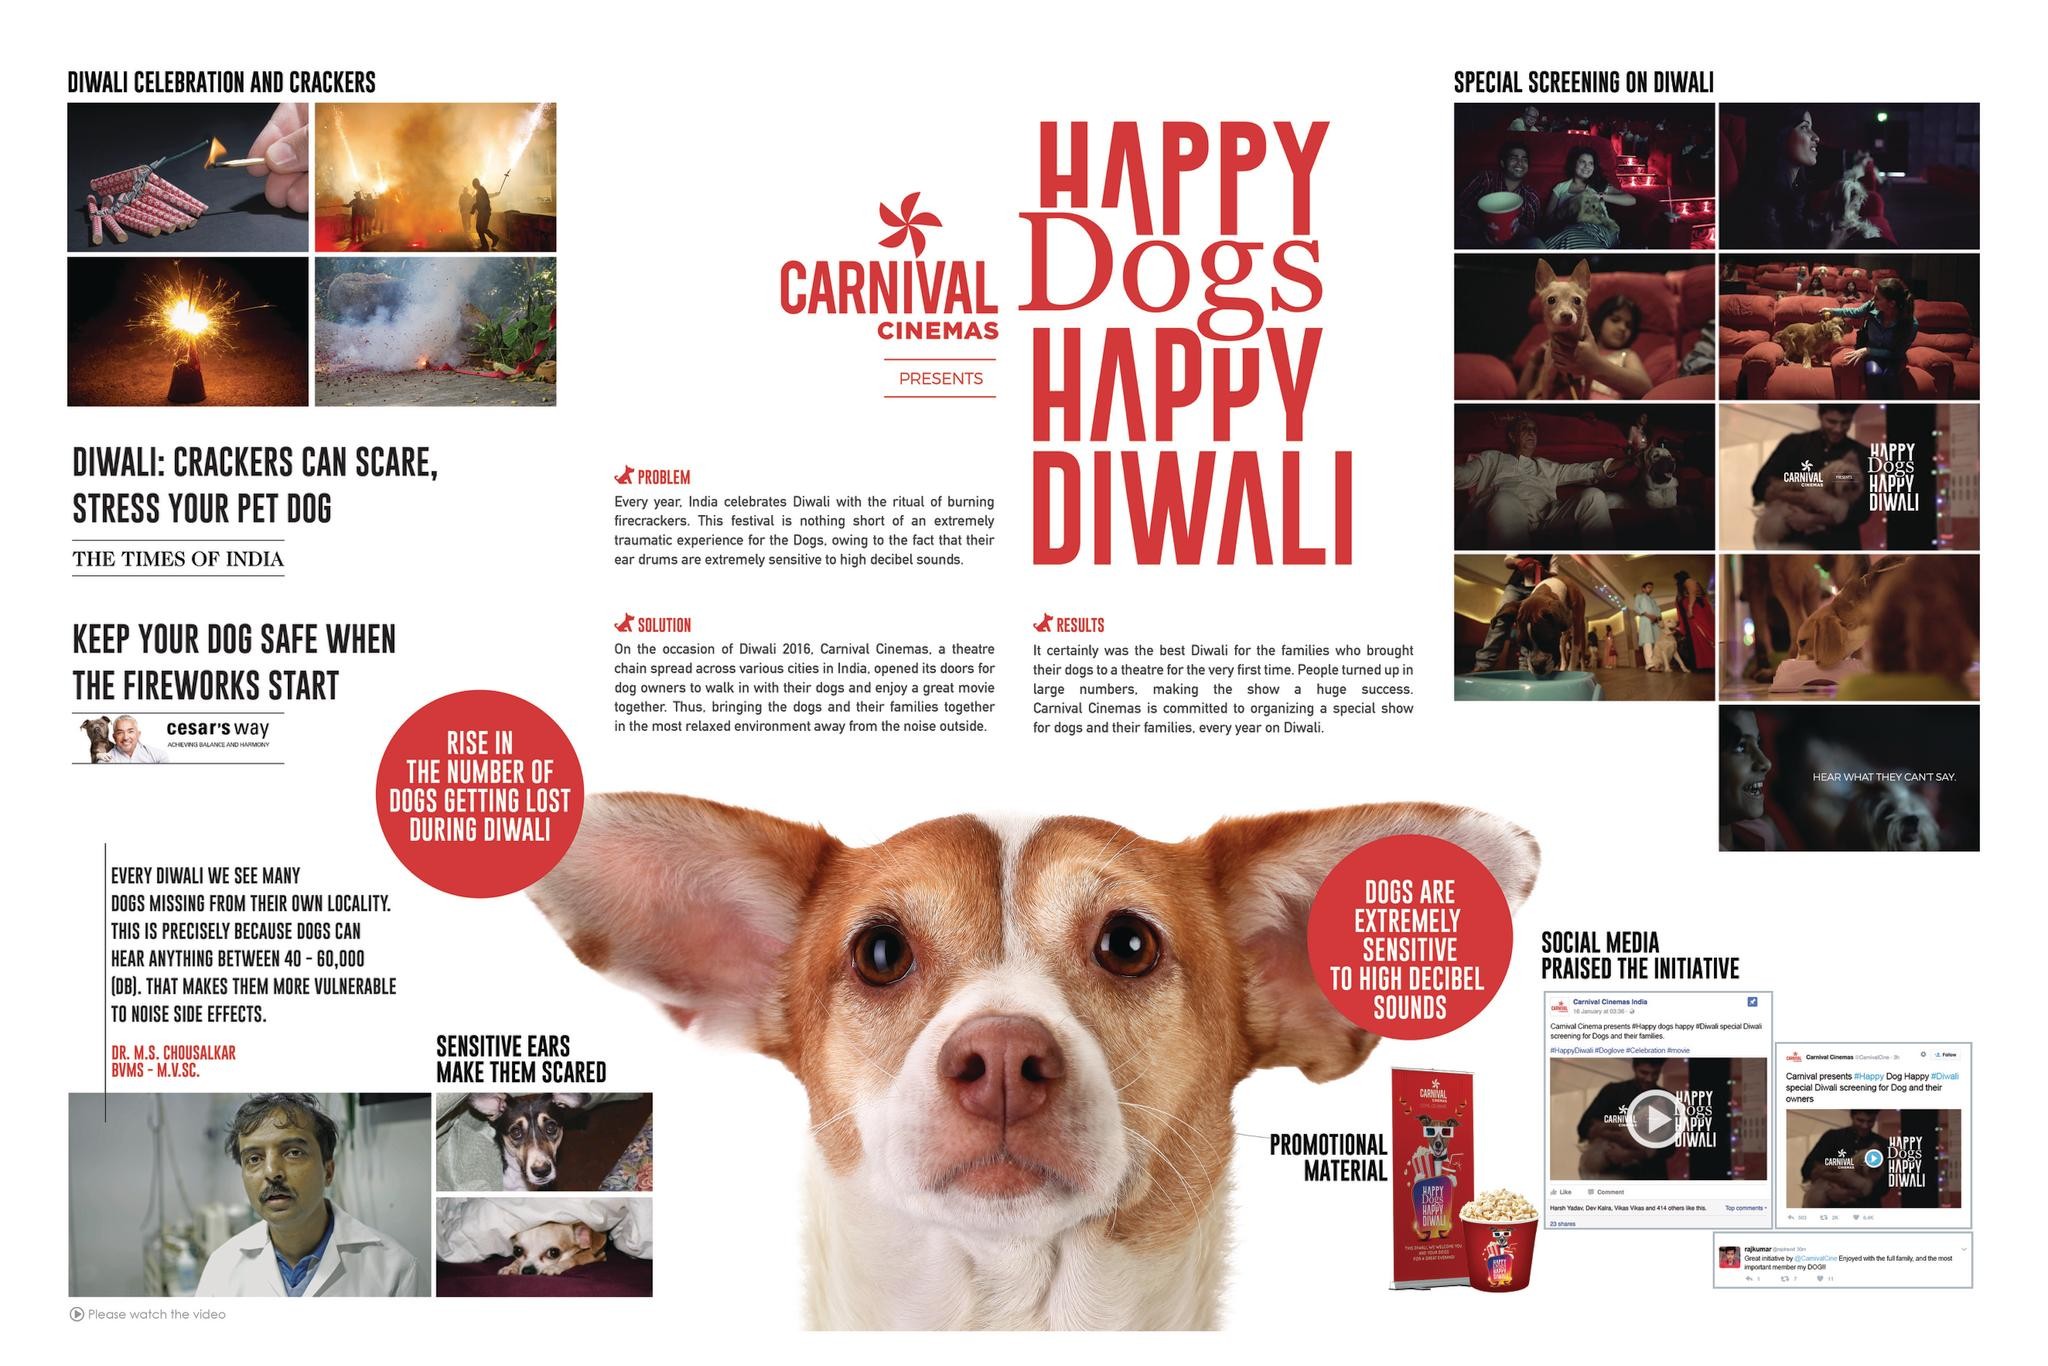 Happy Dogs Happy Diwali